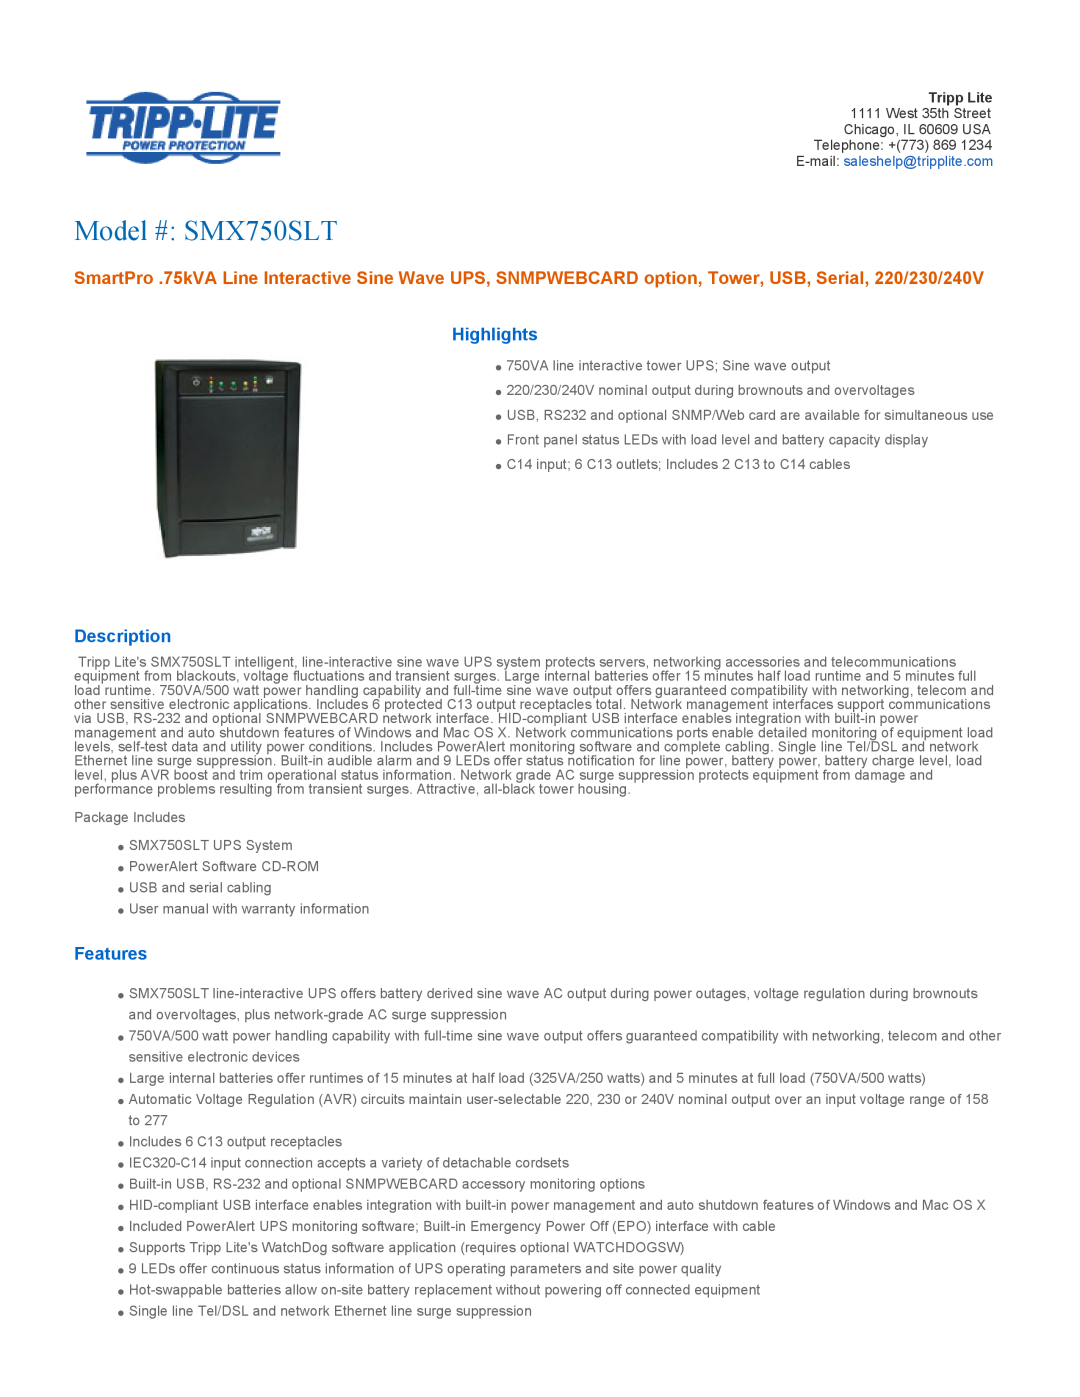 Tripp Lite user manual Highlights, Description, Features, Model # SMX750SLT 